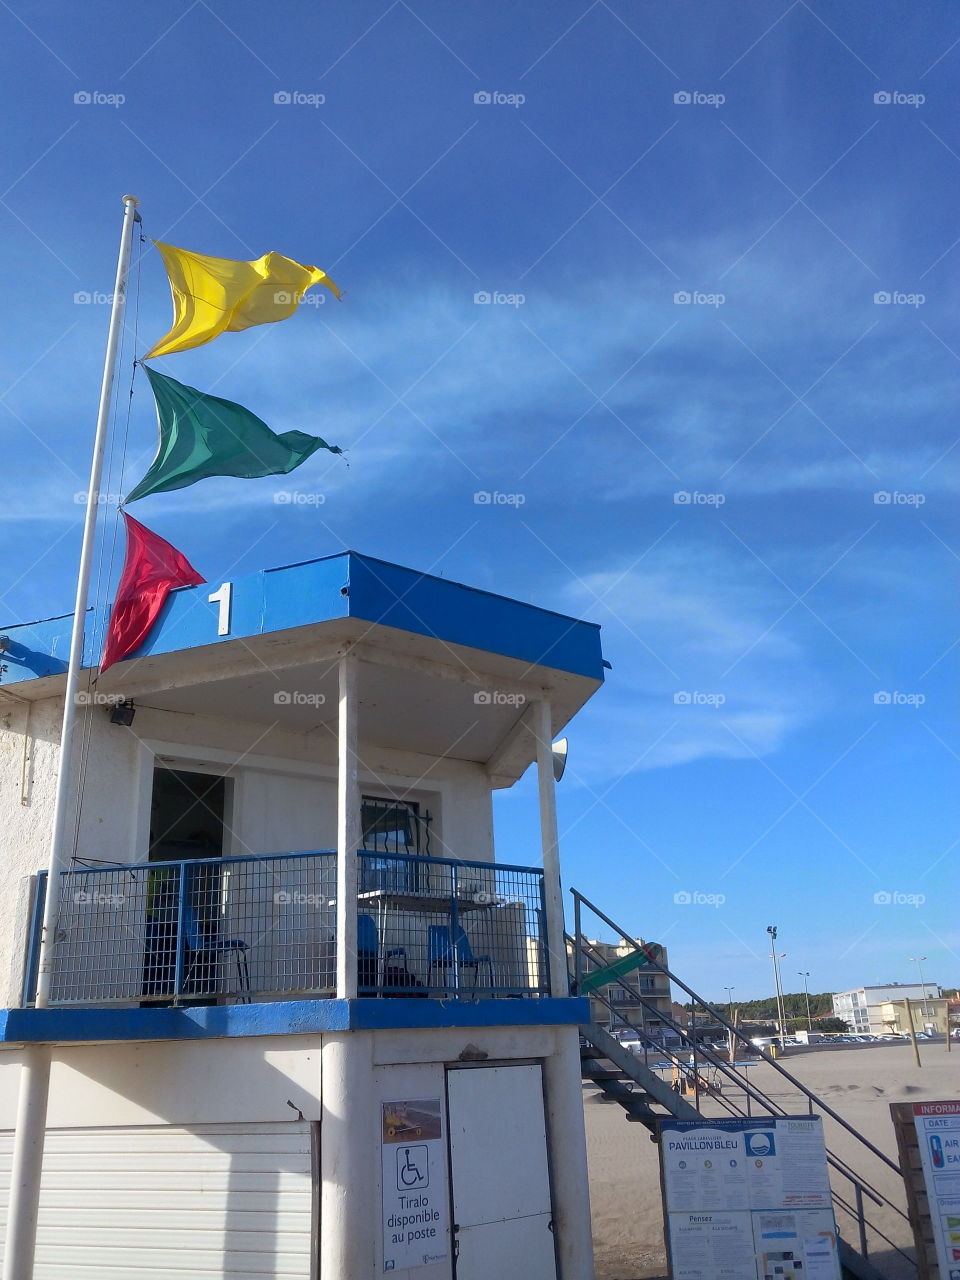 France - Beach - Lifeguard station - Flags